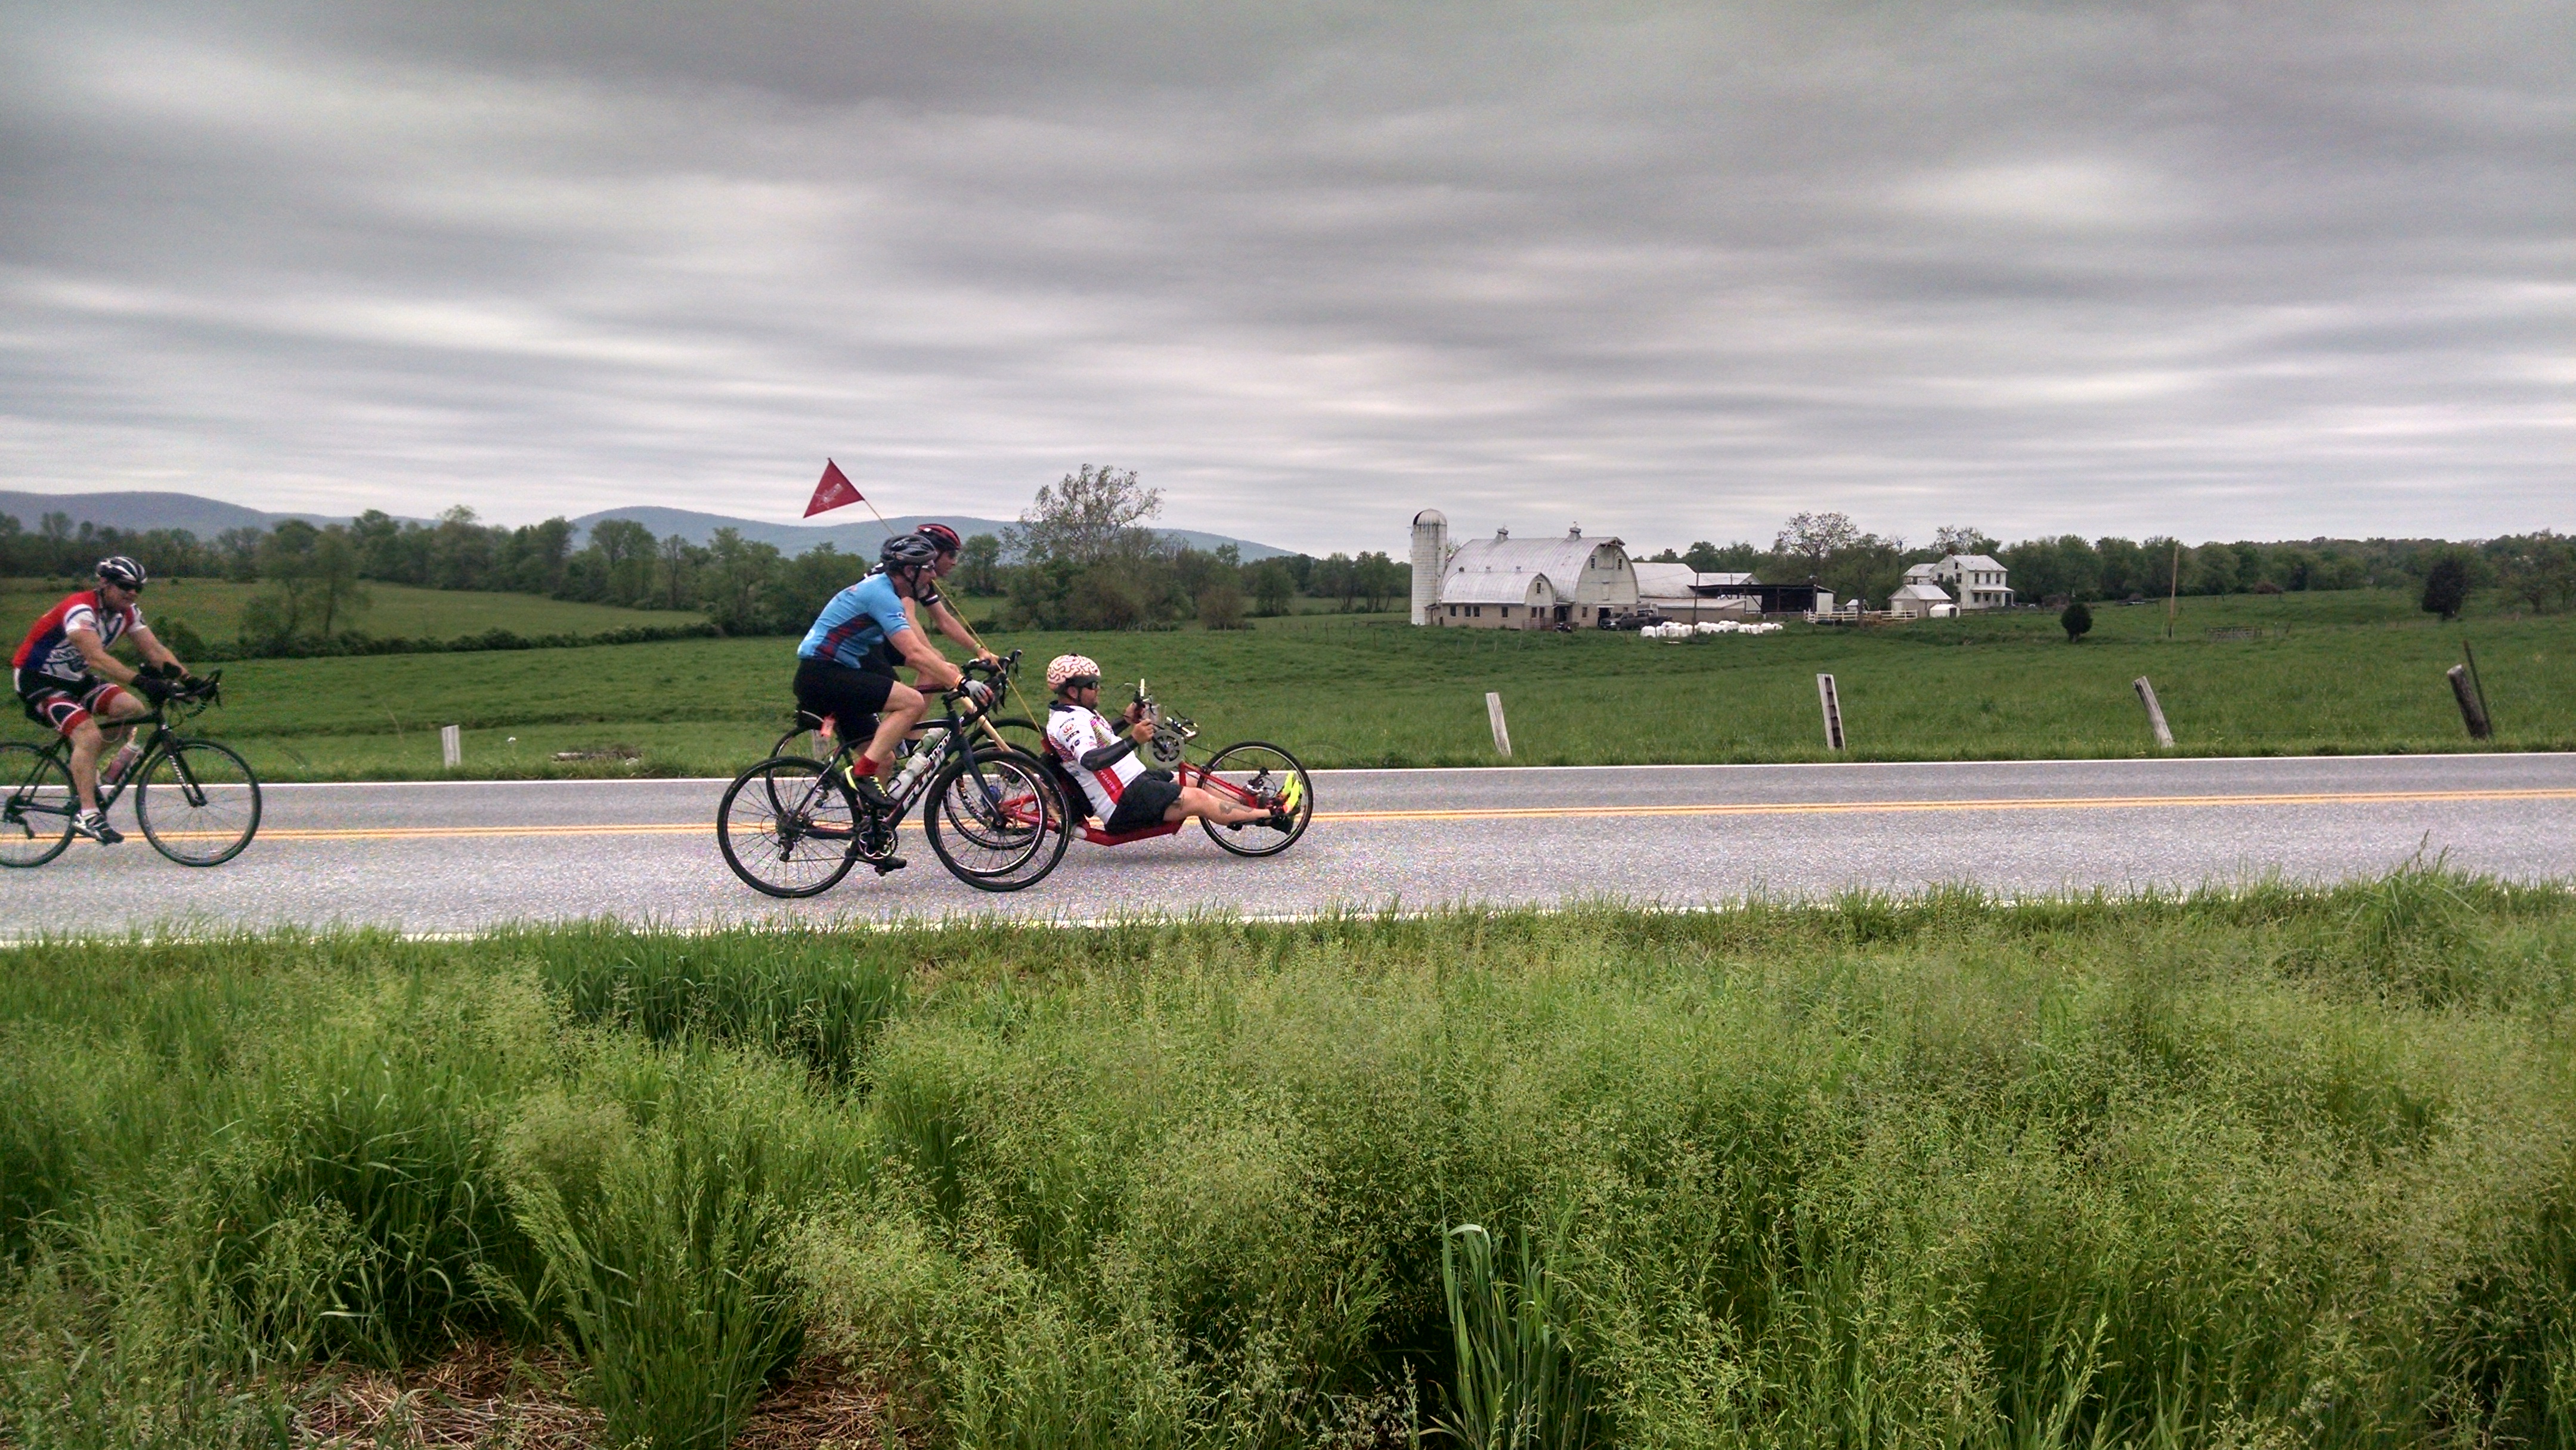 Cycling past a Maryland farm